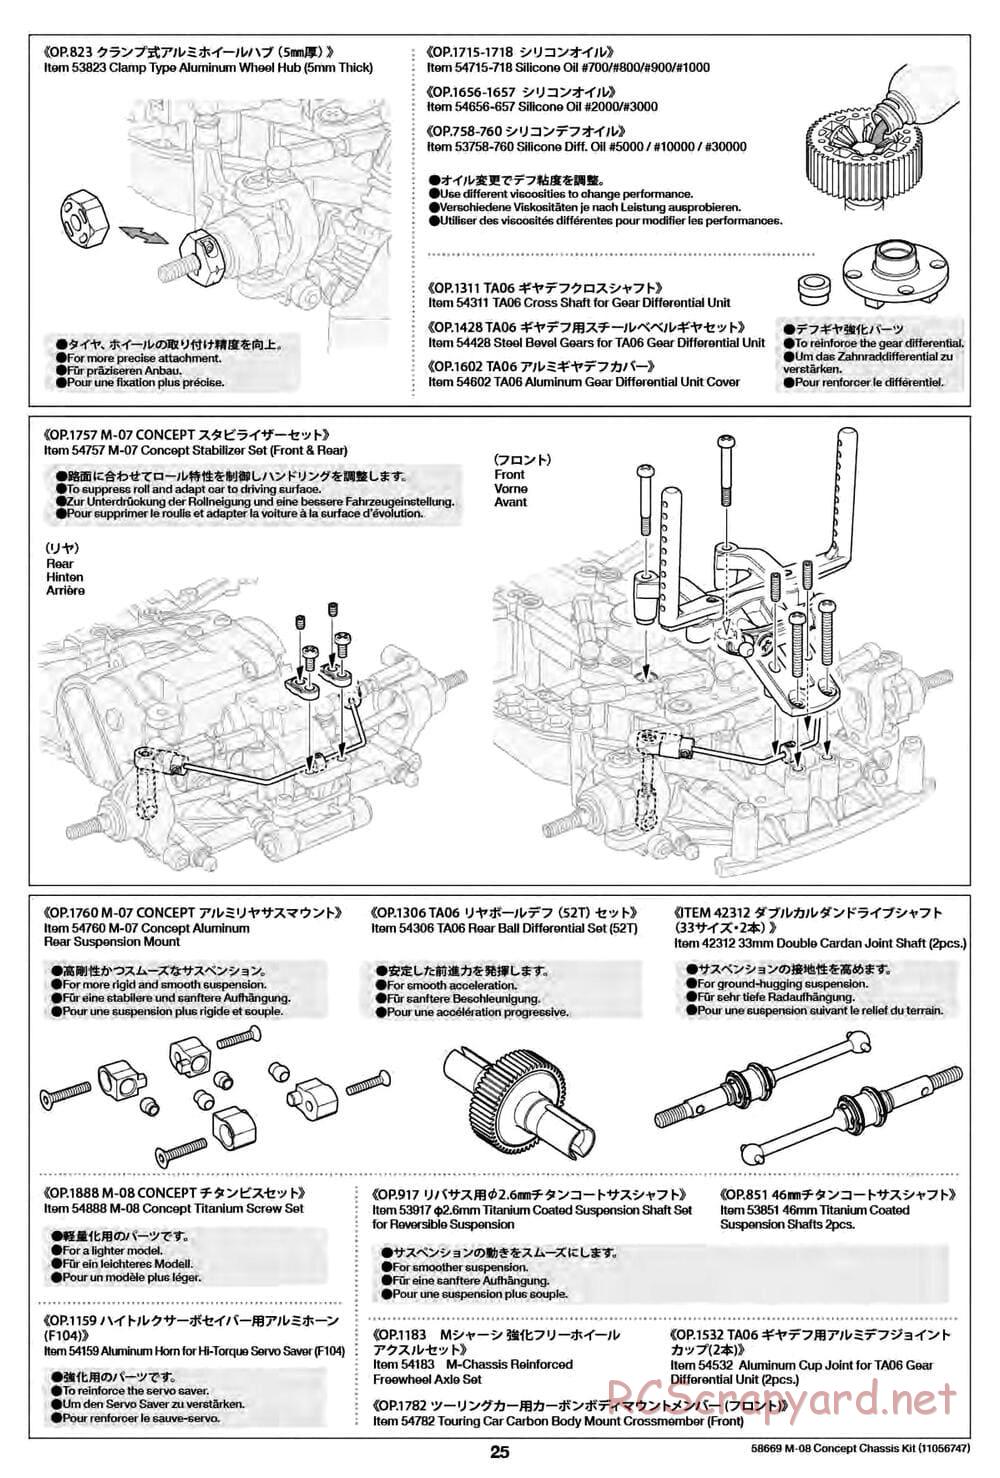 Tamiya - M-08 Concept Chassis - Manual - Page 25